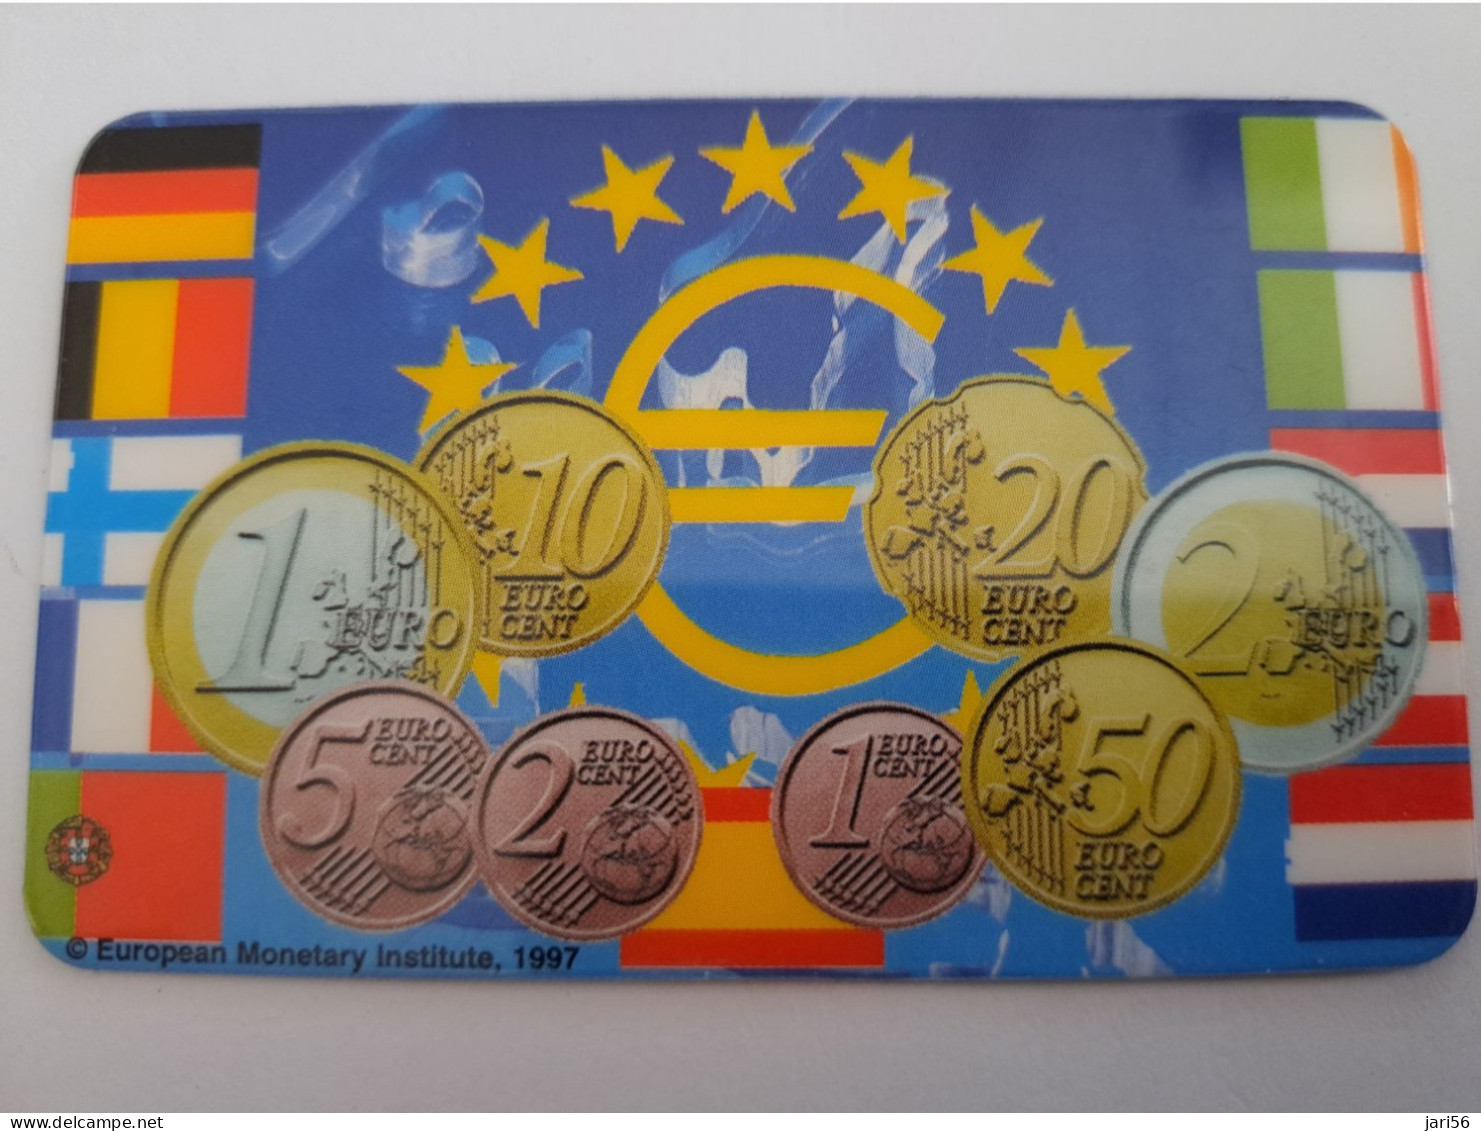 GREAT BRITAIN   20 UNITS   / EURO COINS/ EUROPE /FRONT / PHONECARD   (date 01/  00 )  PREPAID CARD / MINT      **14831** - [10] Sammlungen